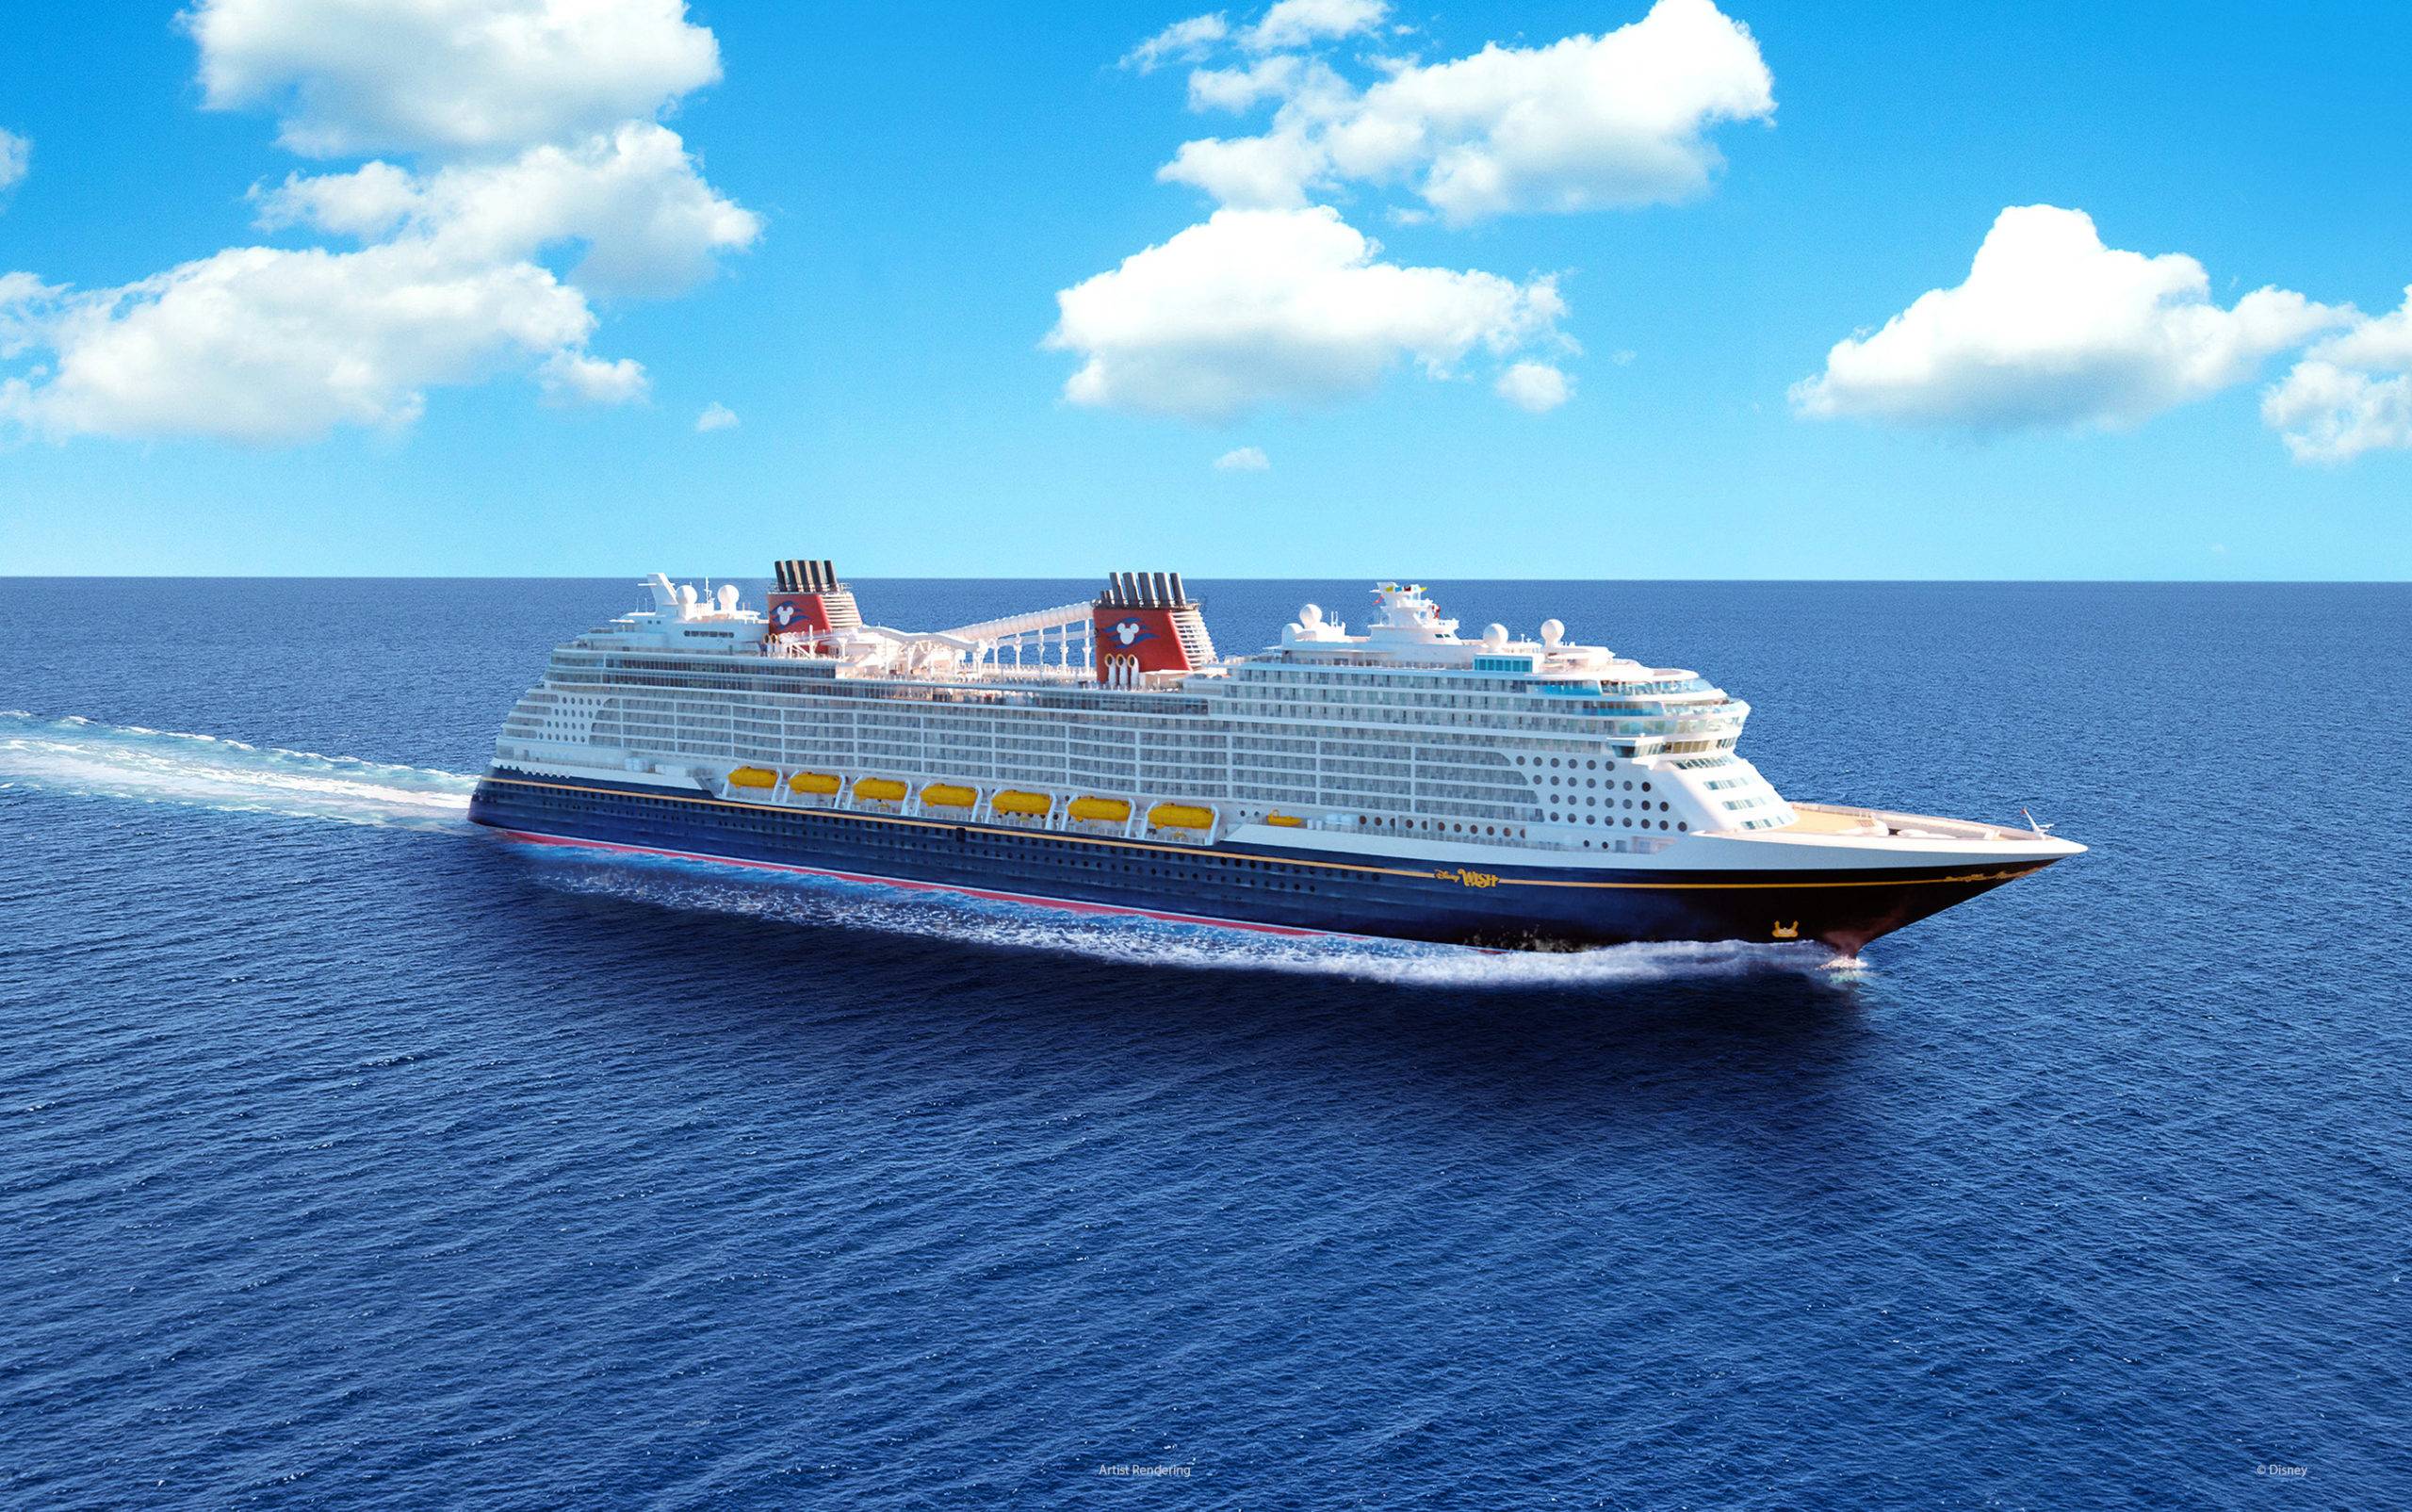 LIVE - Disney Cruise Line debuts the Disney Wish